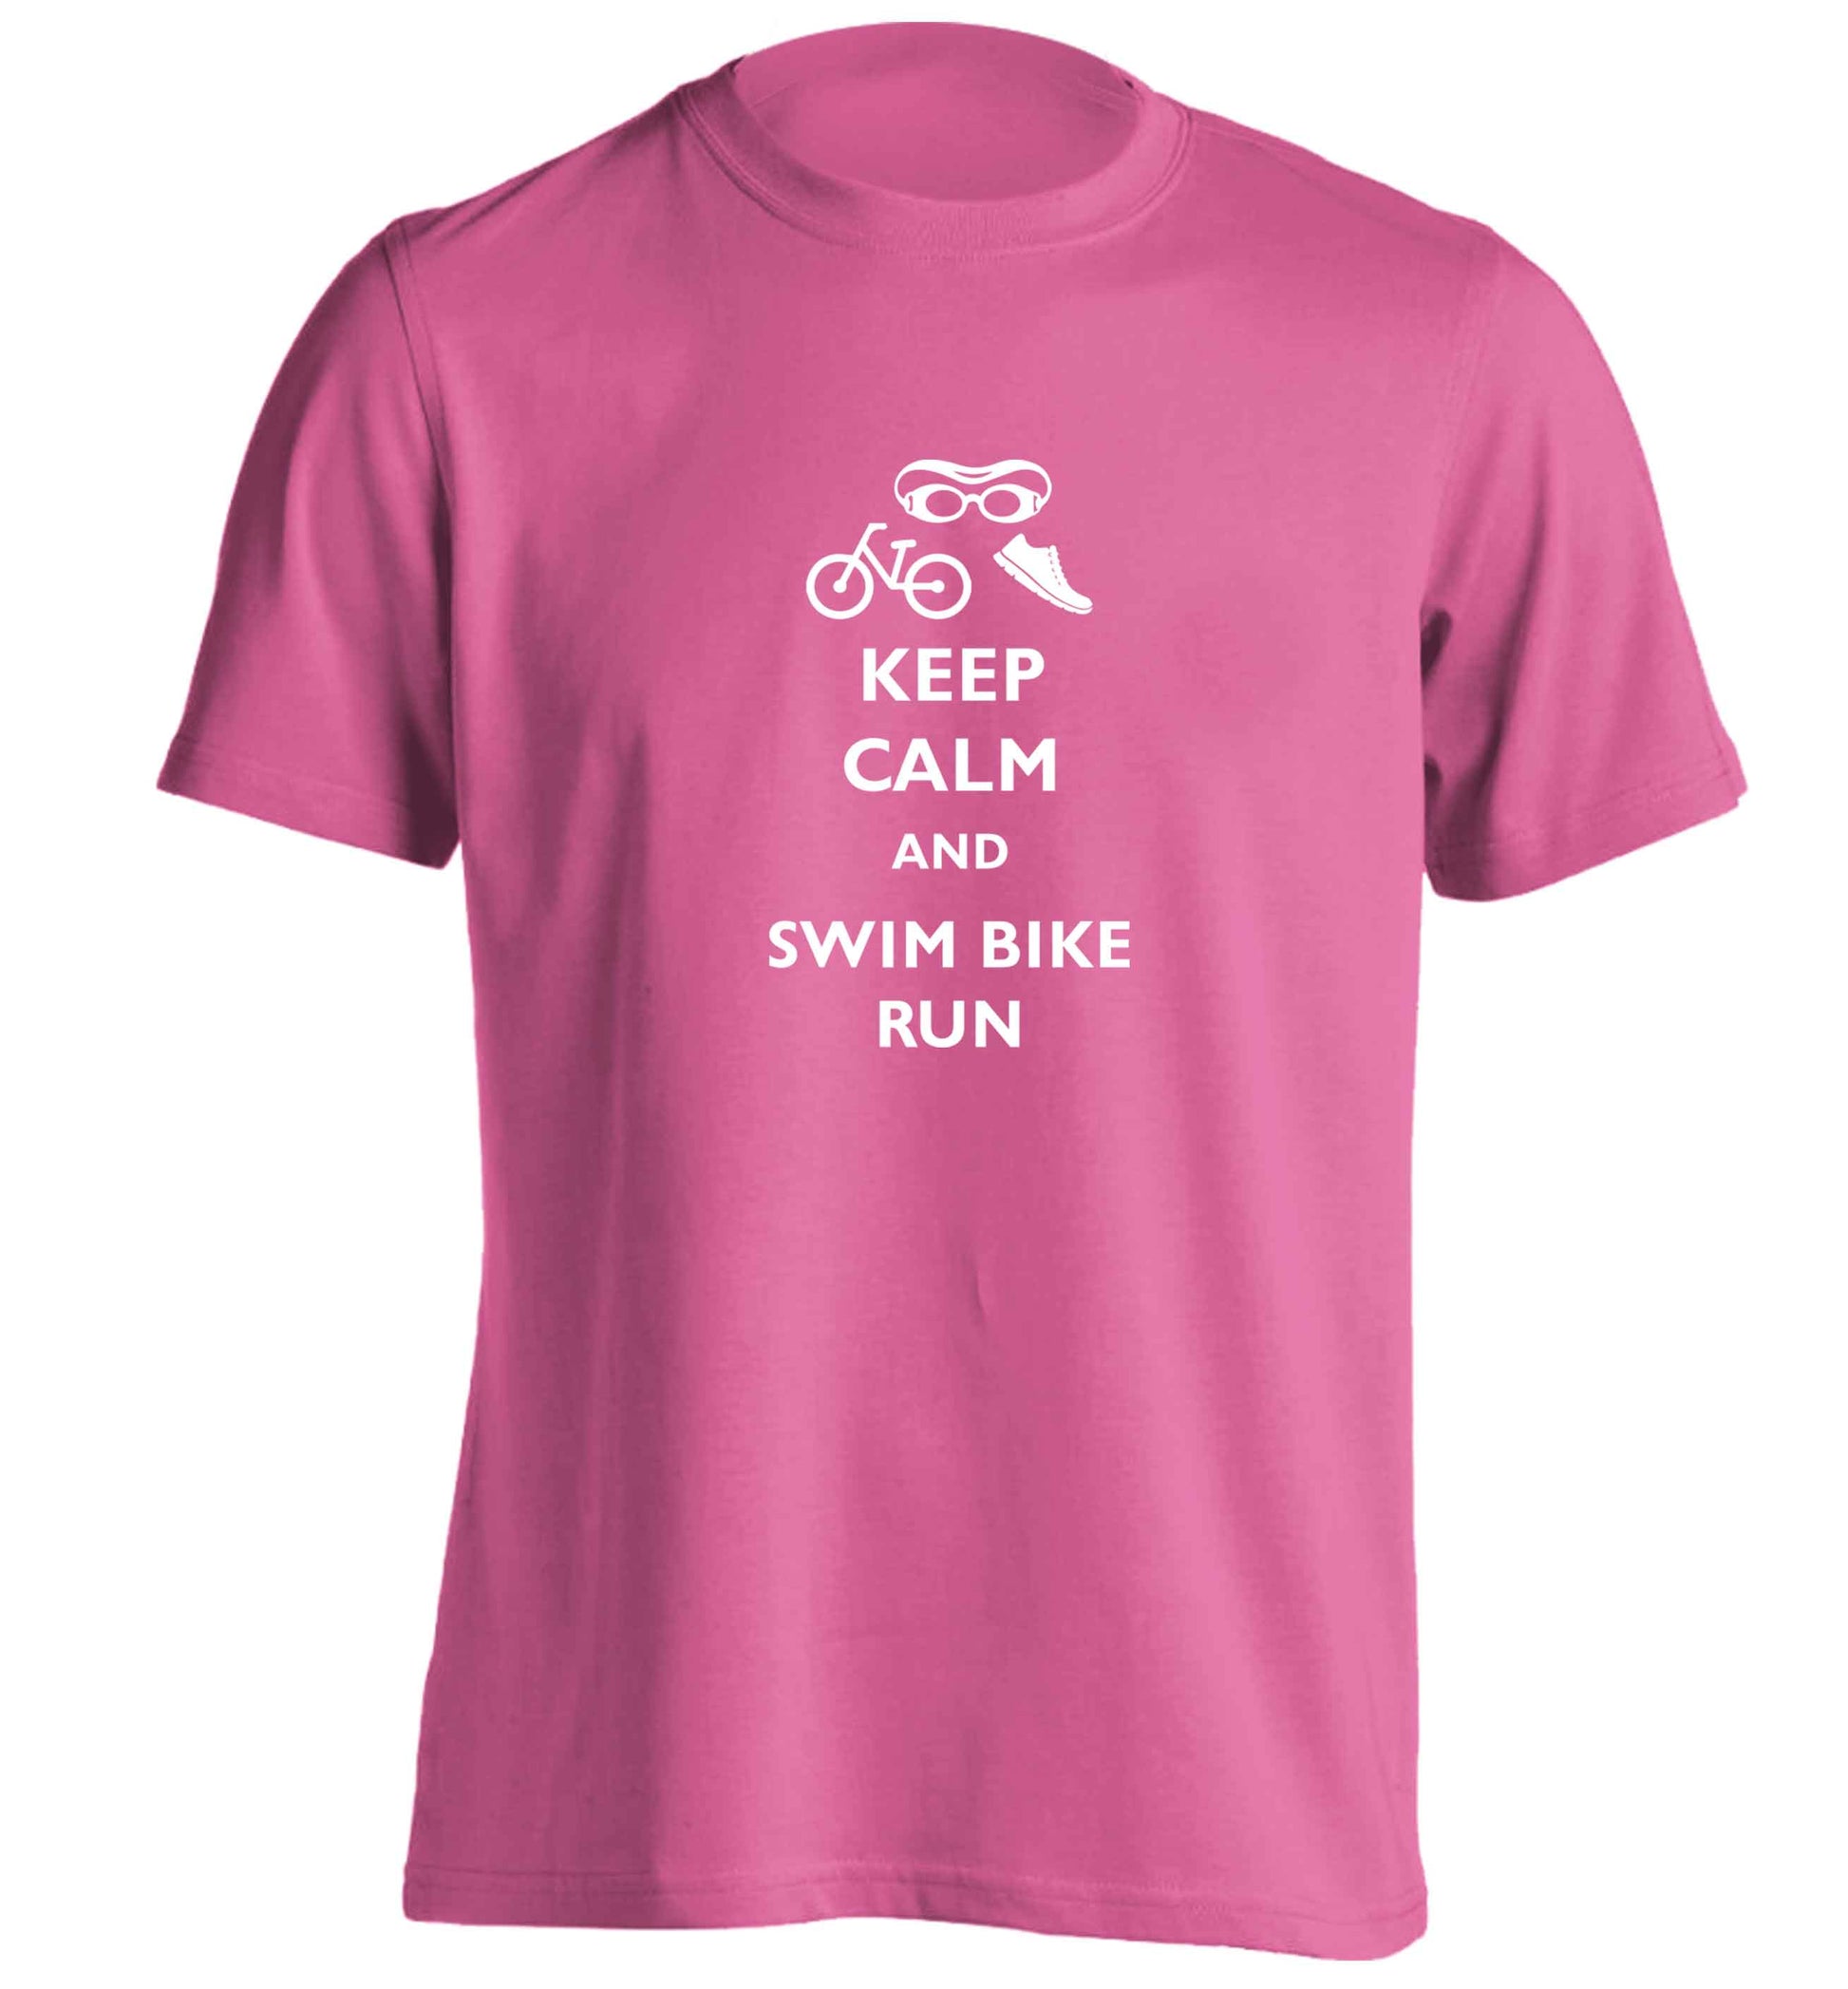 Keep calm and swim bike run adults unisex pink Tshirt 2XL